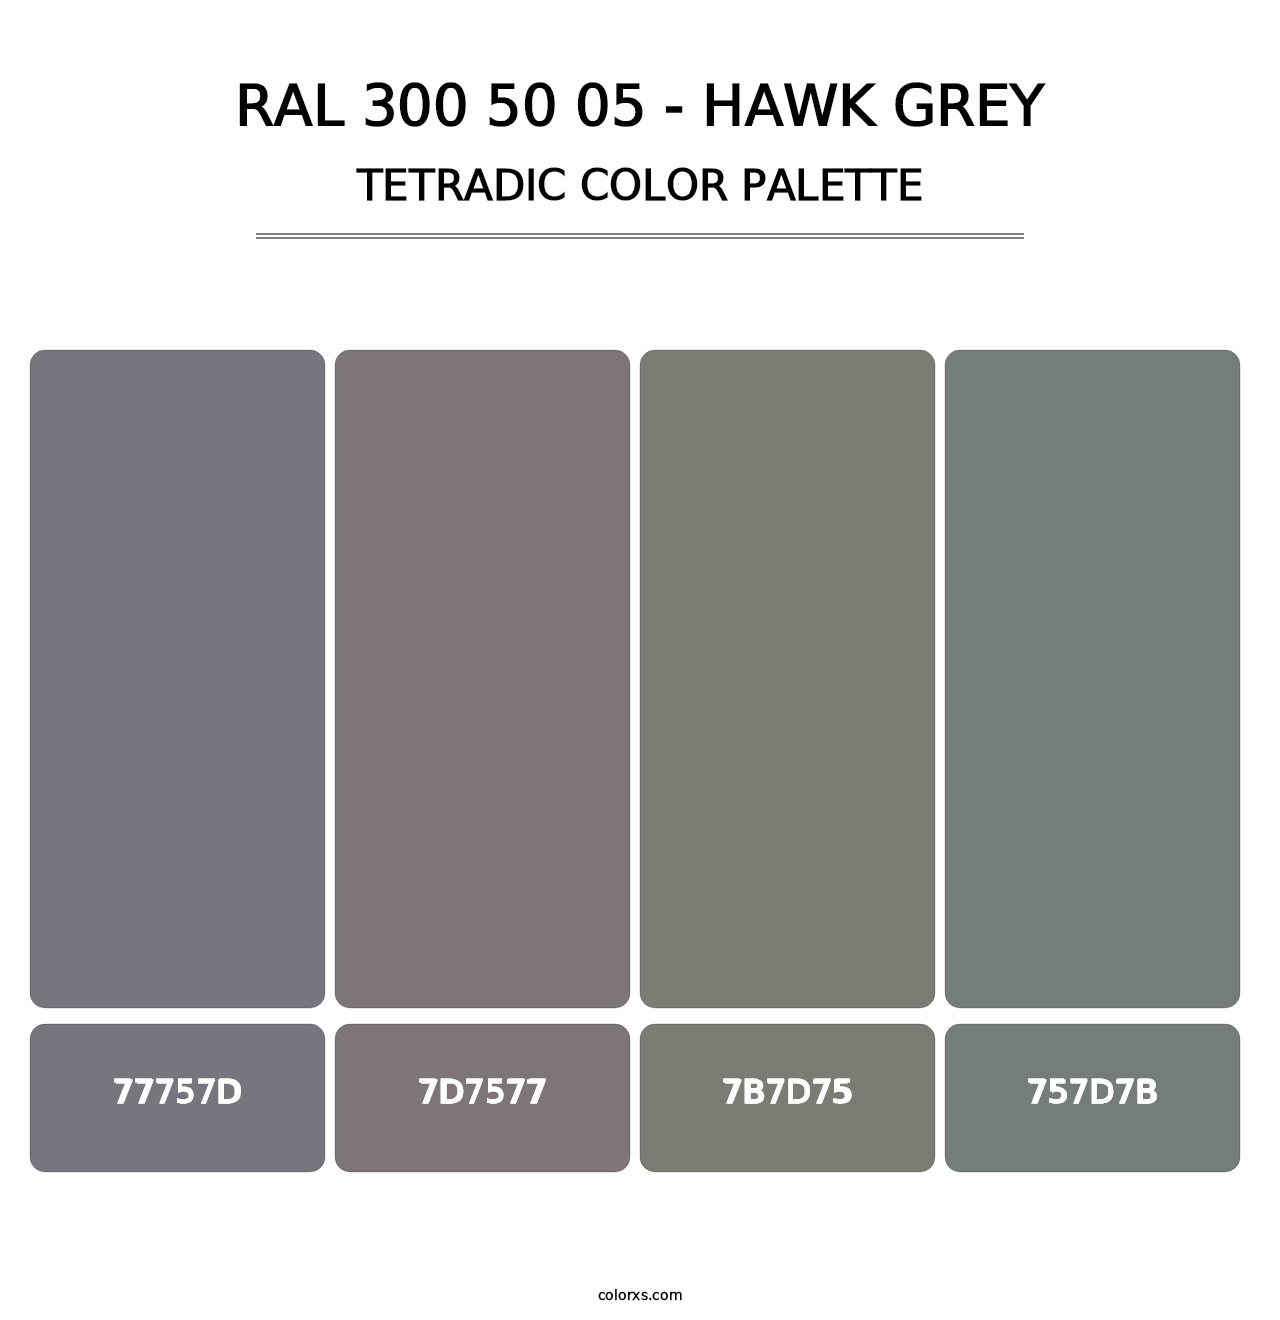 RAL 300 50 05 - Hawk Grey - Tetradic Color Palette